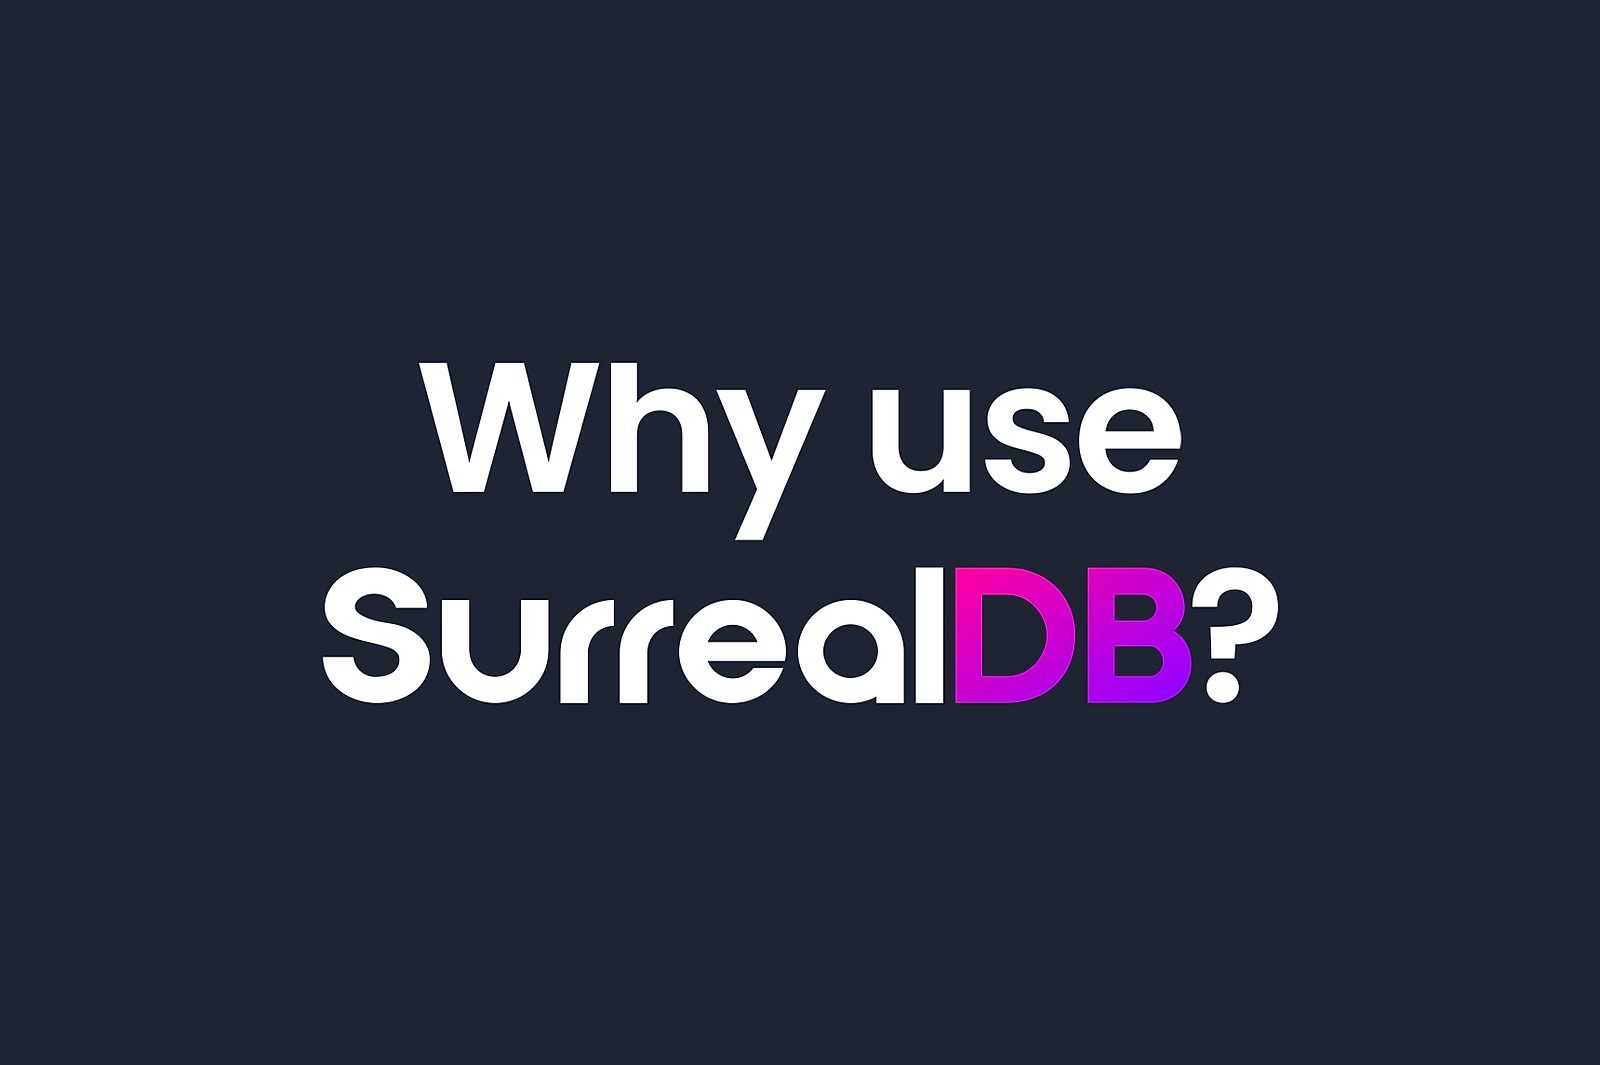 Why use SurrealDB?